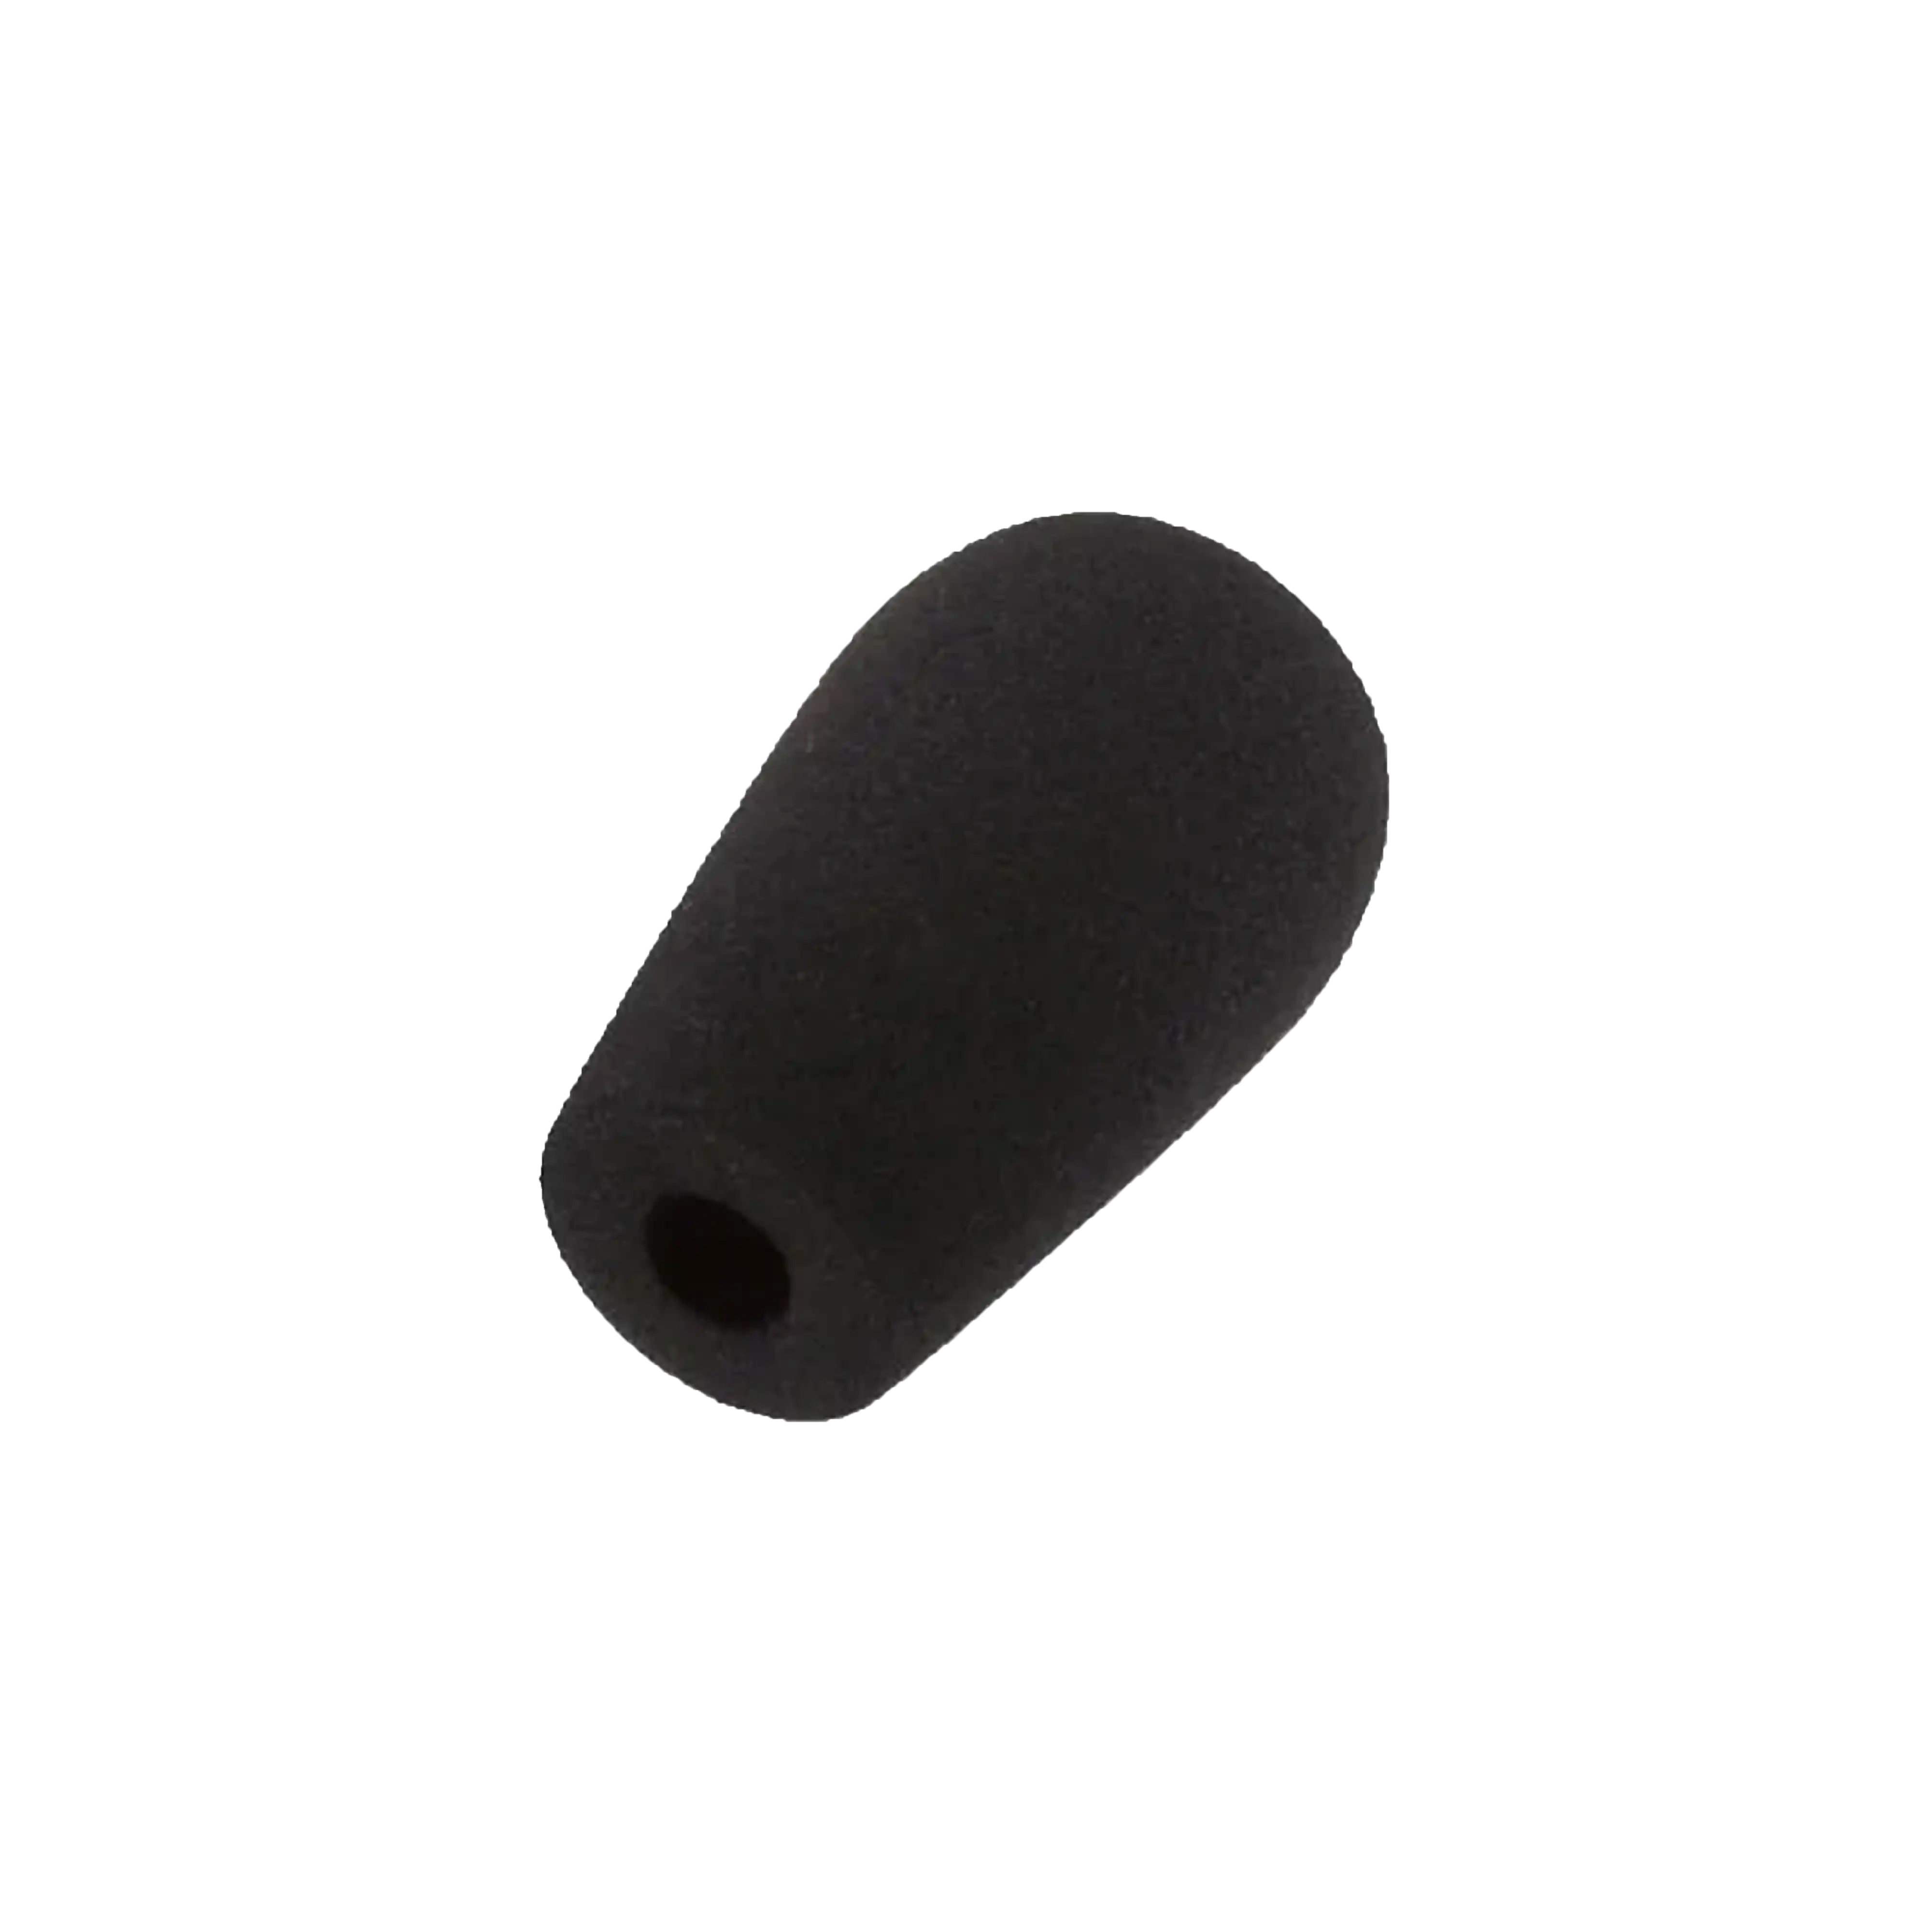 Tapered EVA Butt Caps - 2.5" x 3/8" ID